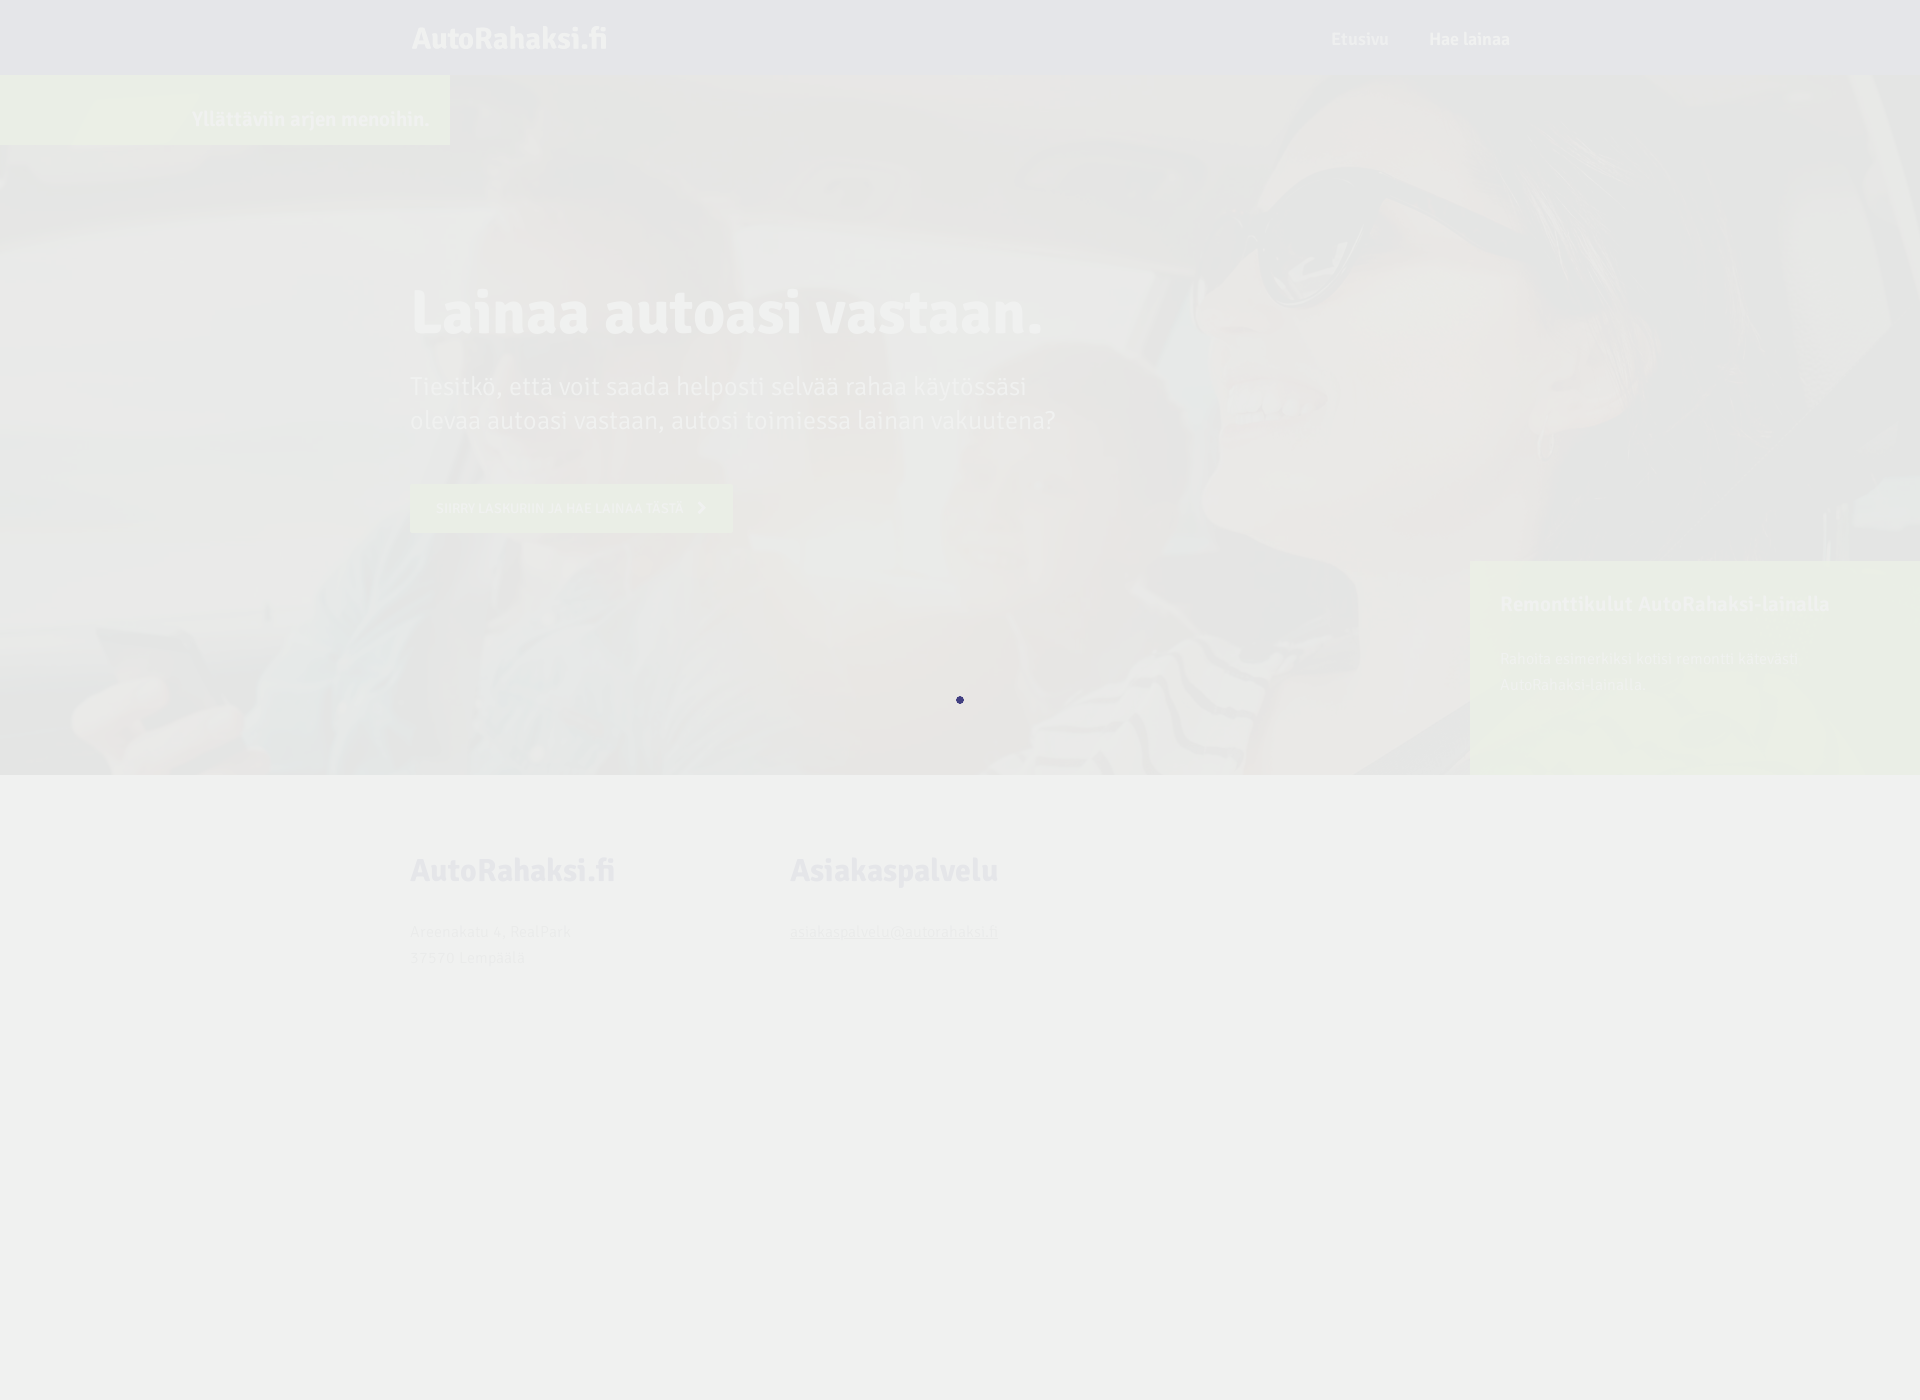 Screenshot for autorahaksi.fi